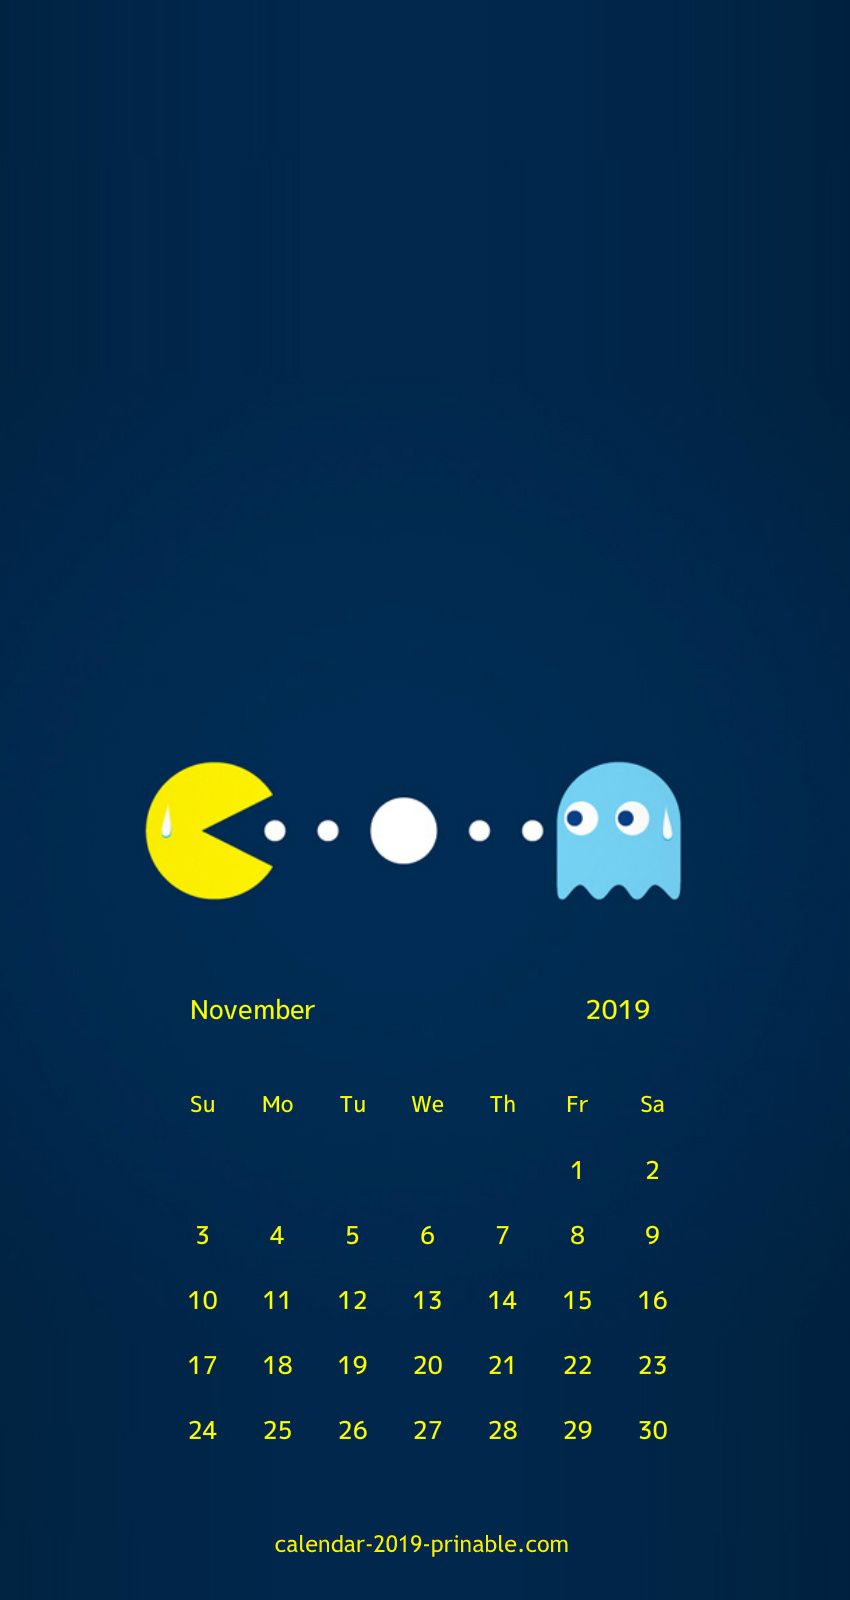 November iPhone Calendar Wallpaper